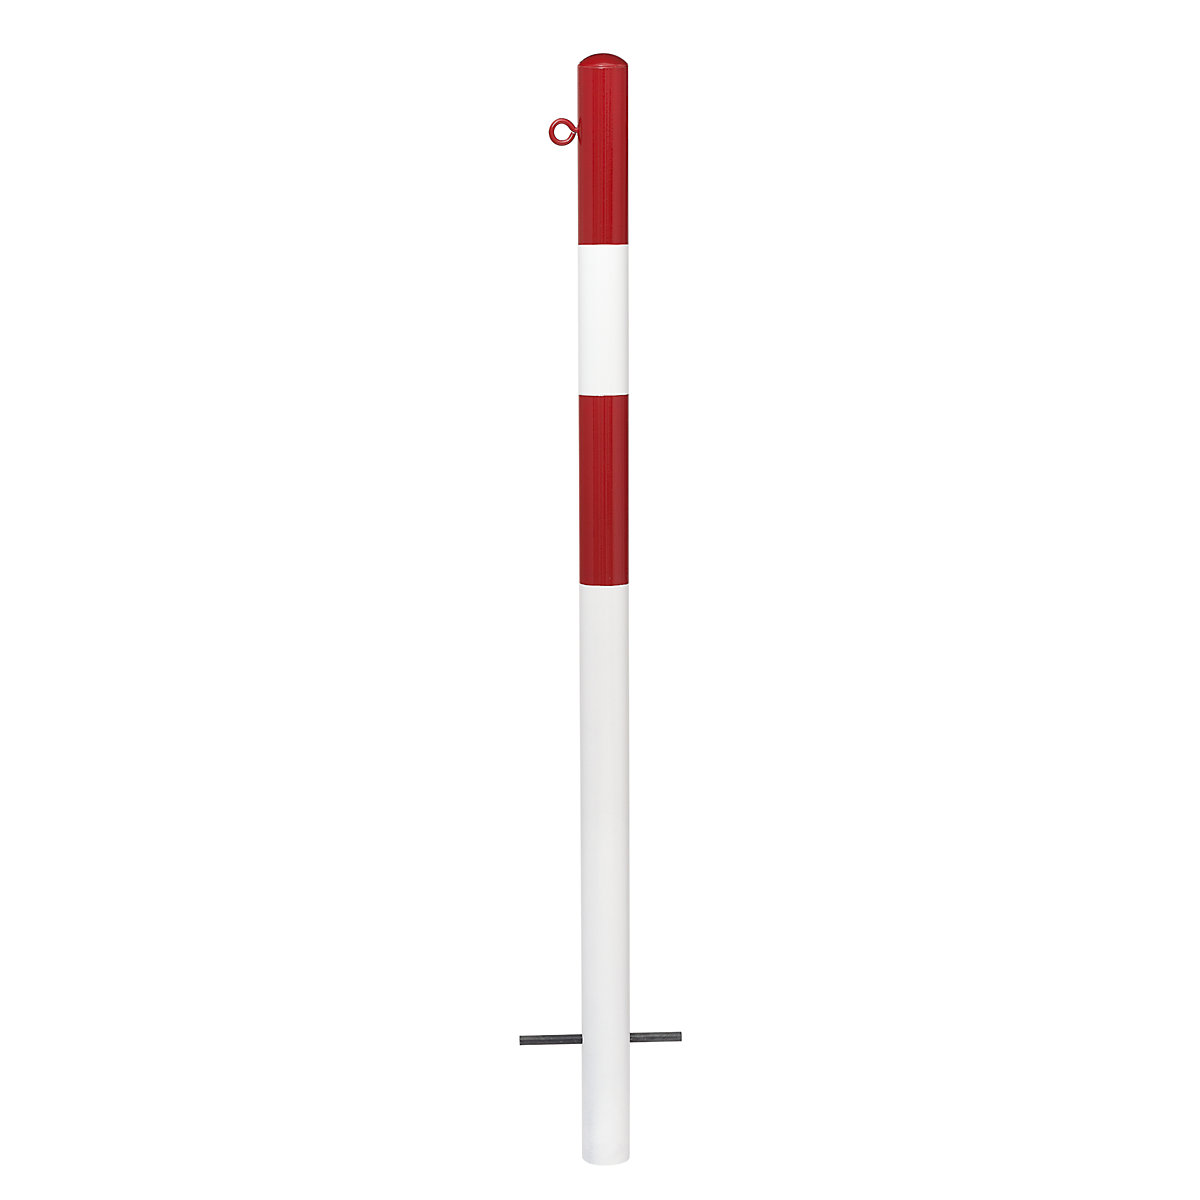 Zahradzovací stĺpik, na zabetónovanie, Ø 60 mm, červeno-biela plastová povrchová úprava, 1 oko-5